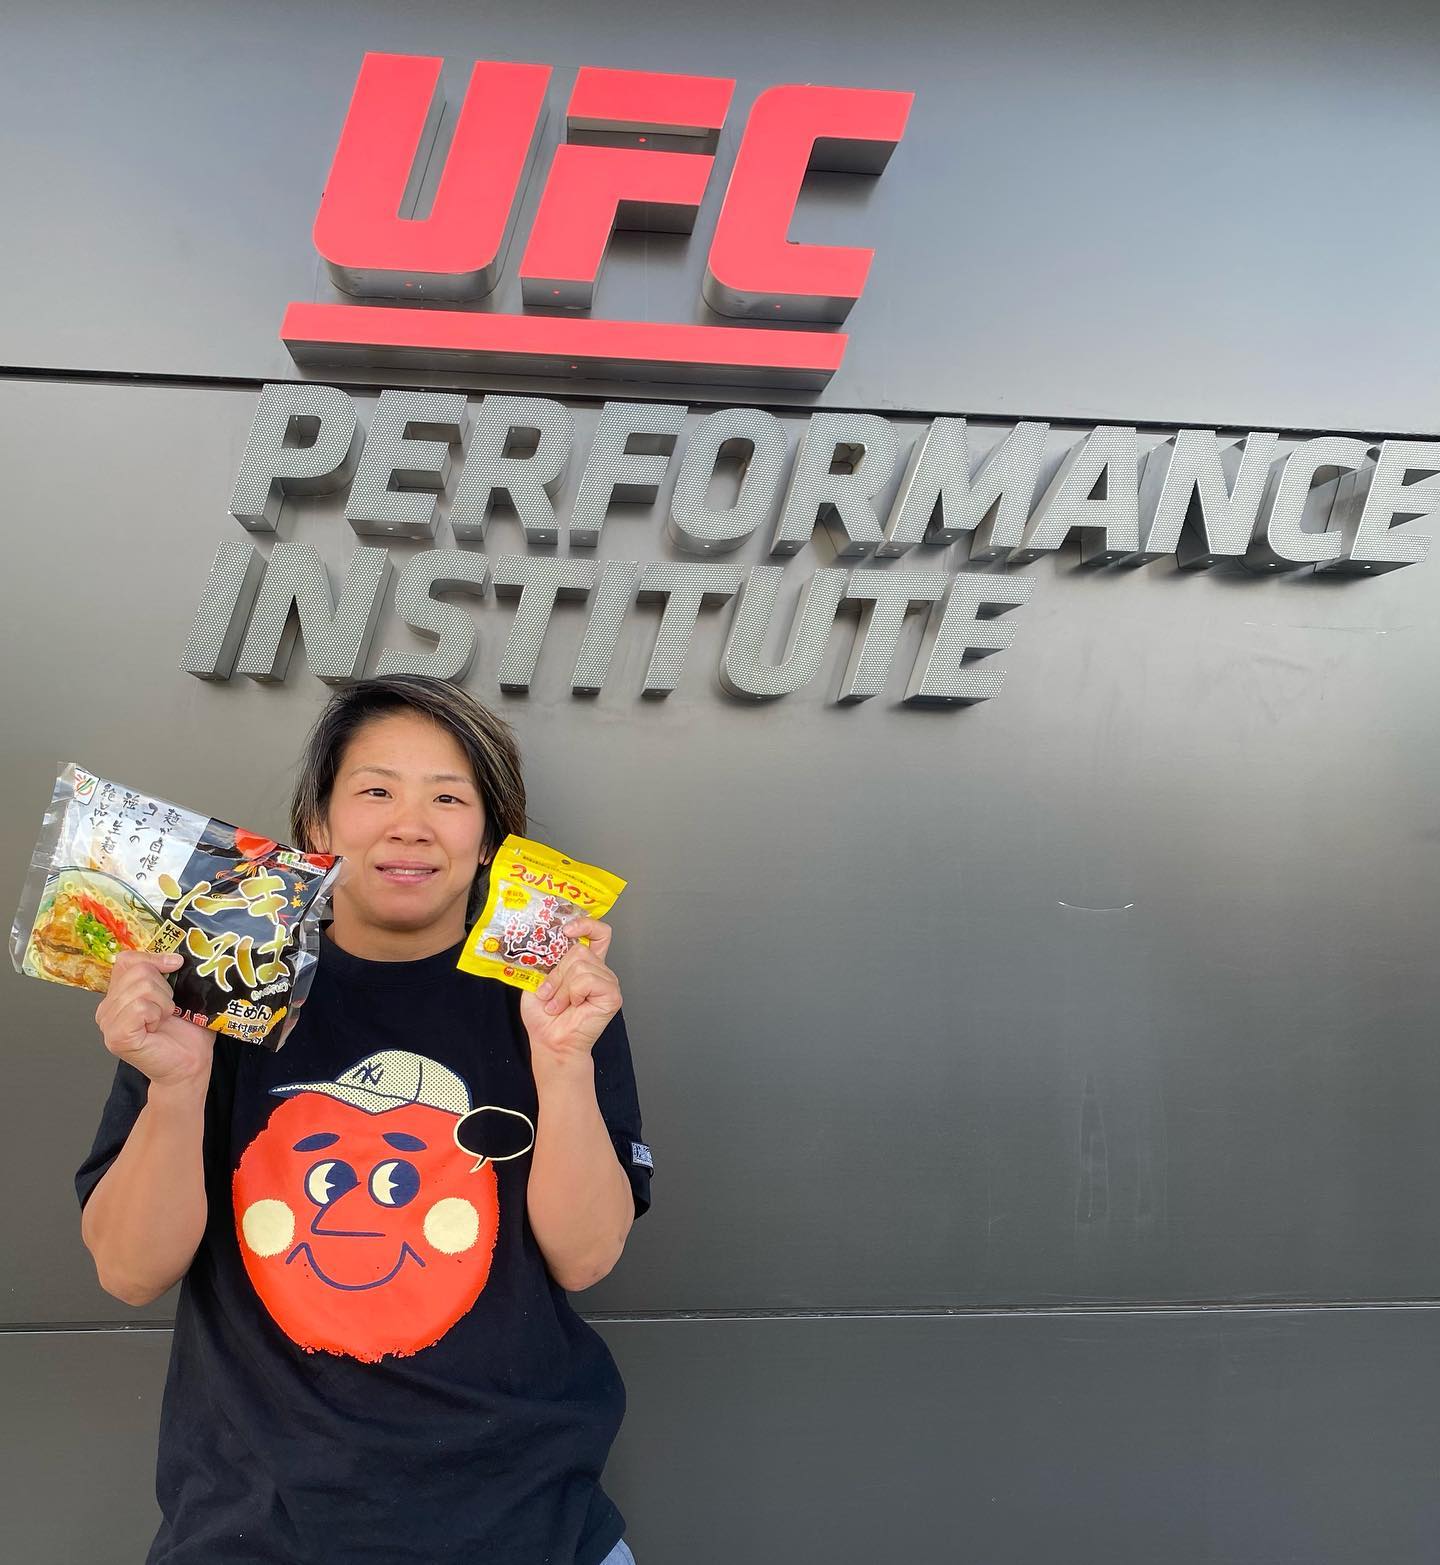 UFCファイターの先輩である現在Las Vegasを拠点とする村田夏南子さんとUFC PIにてご挨拶。同じ日本人として、平良達郎、岡田遼にサポート頂いています。感謝！日本から世界へ！！#平良達郎#修斗#UFC#村田夏南子#inspirit#沖縄